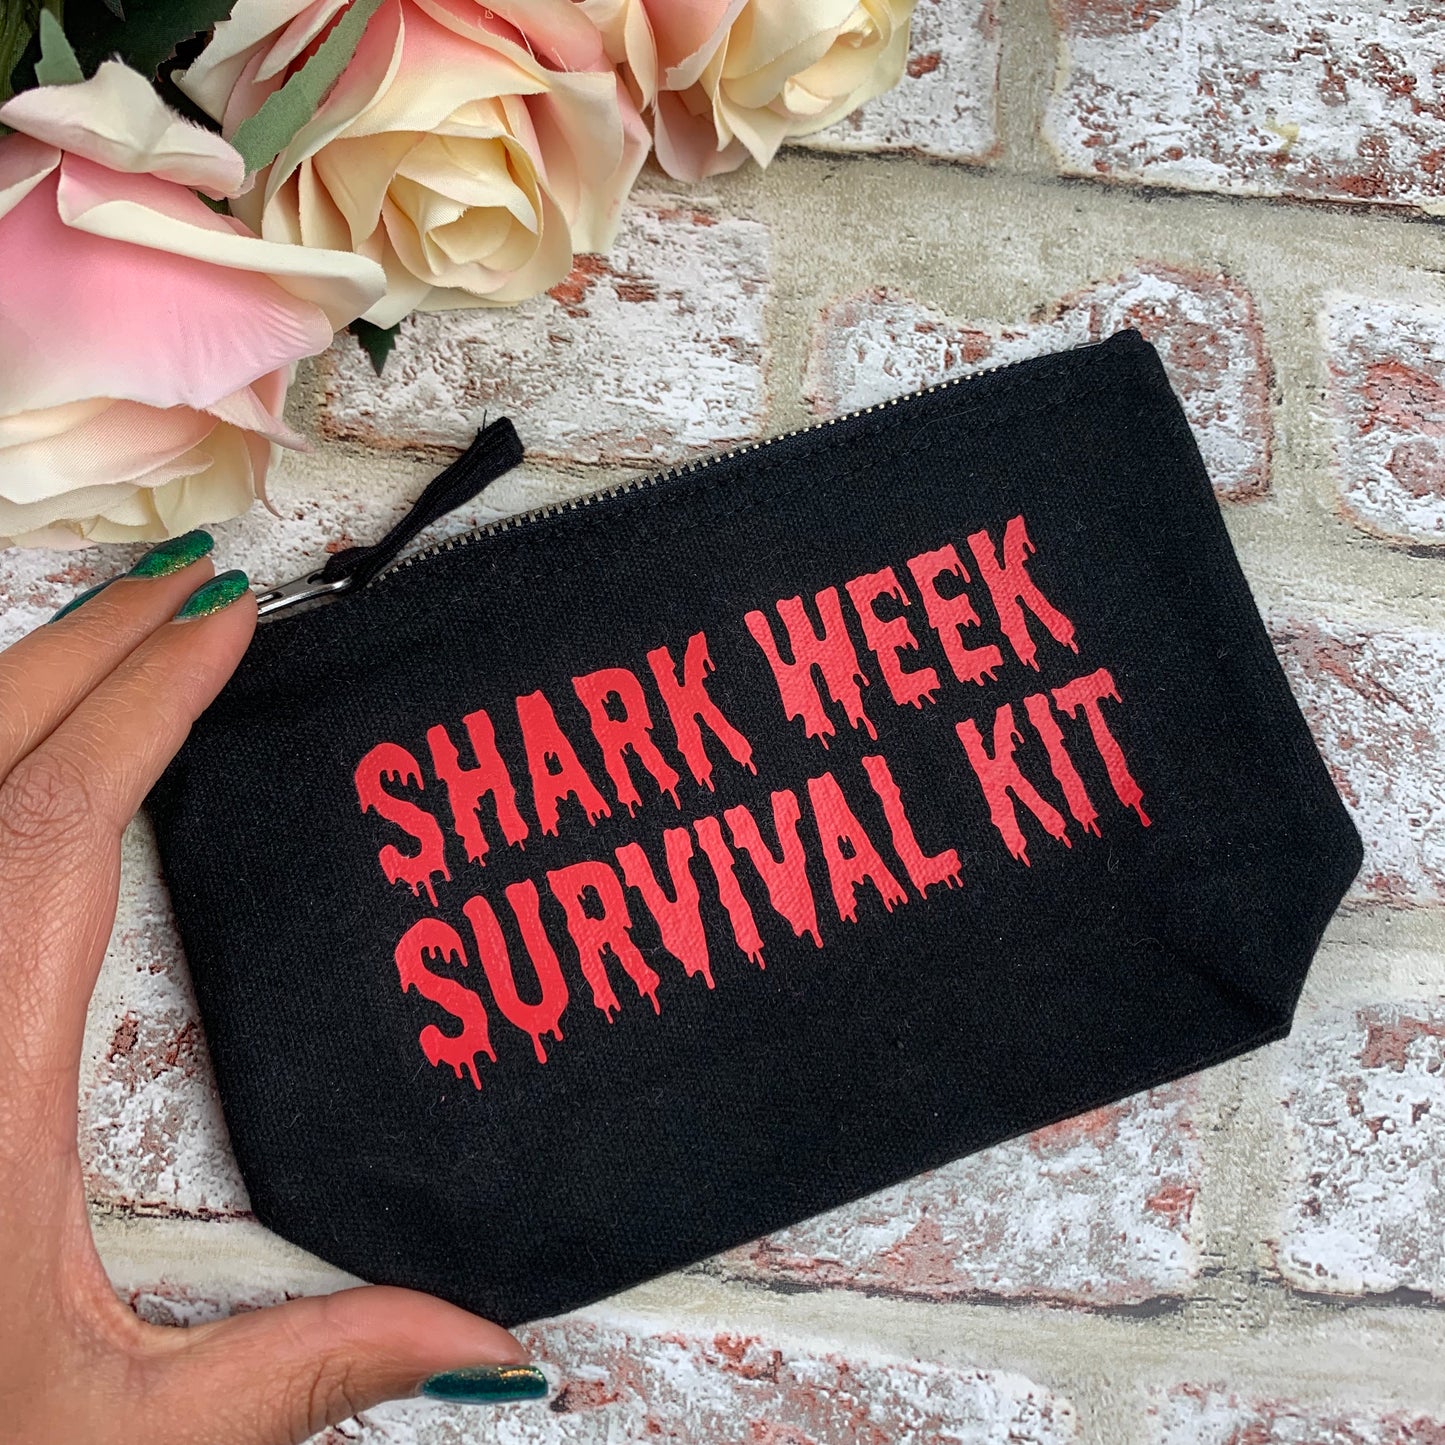 Shark week survival kit (Drip) - Tampon, pad, sanitary bag / Period Pouch